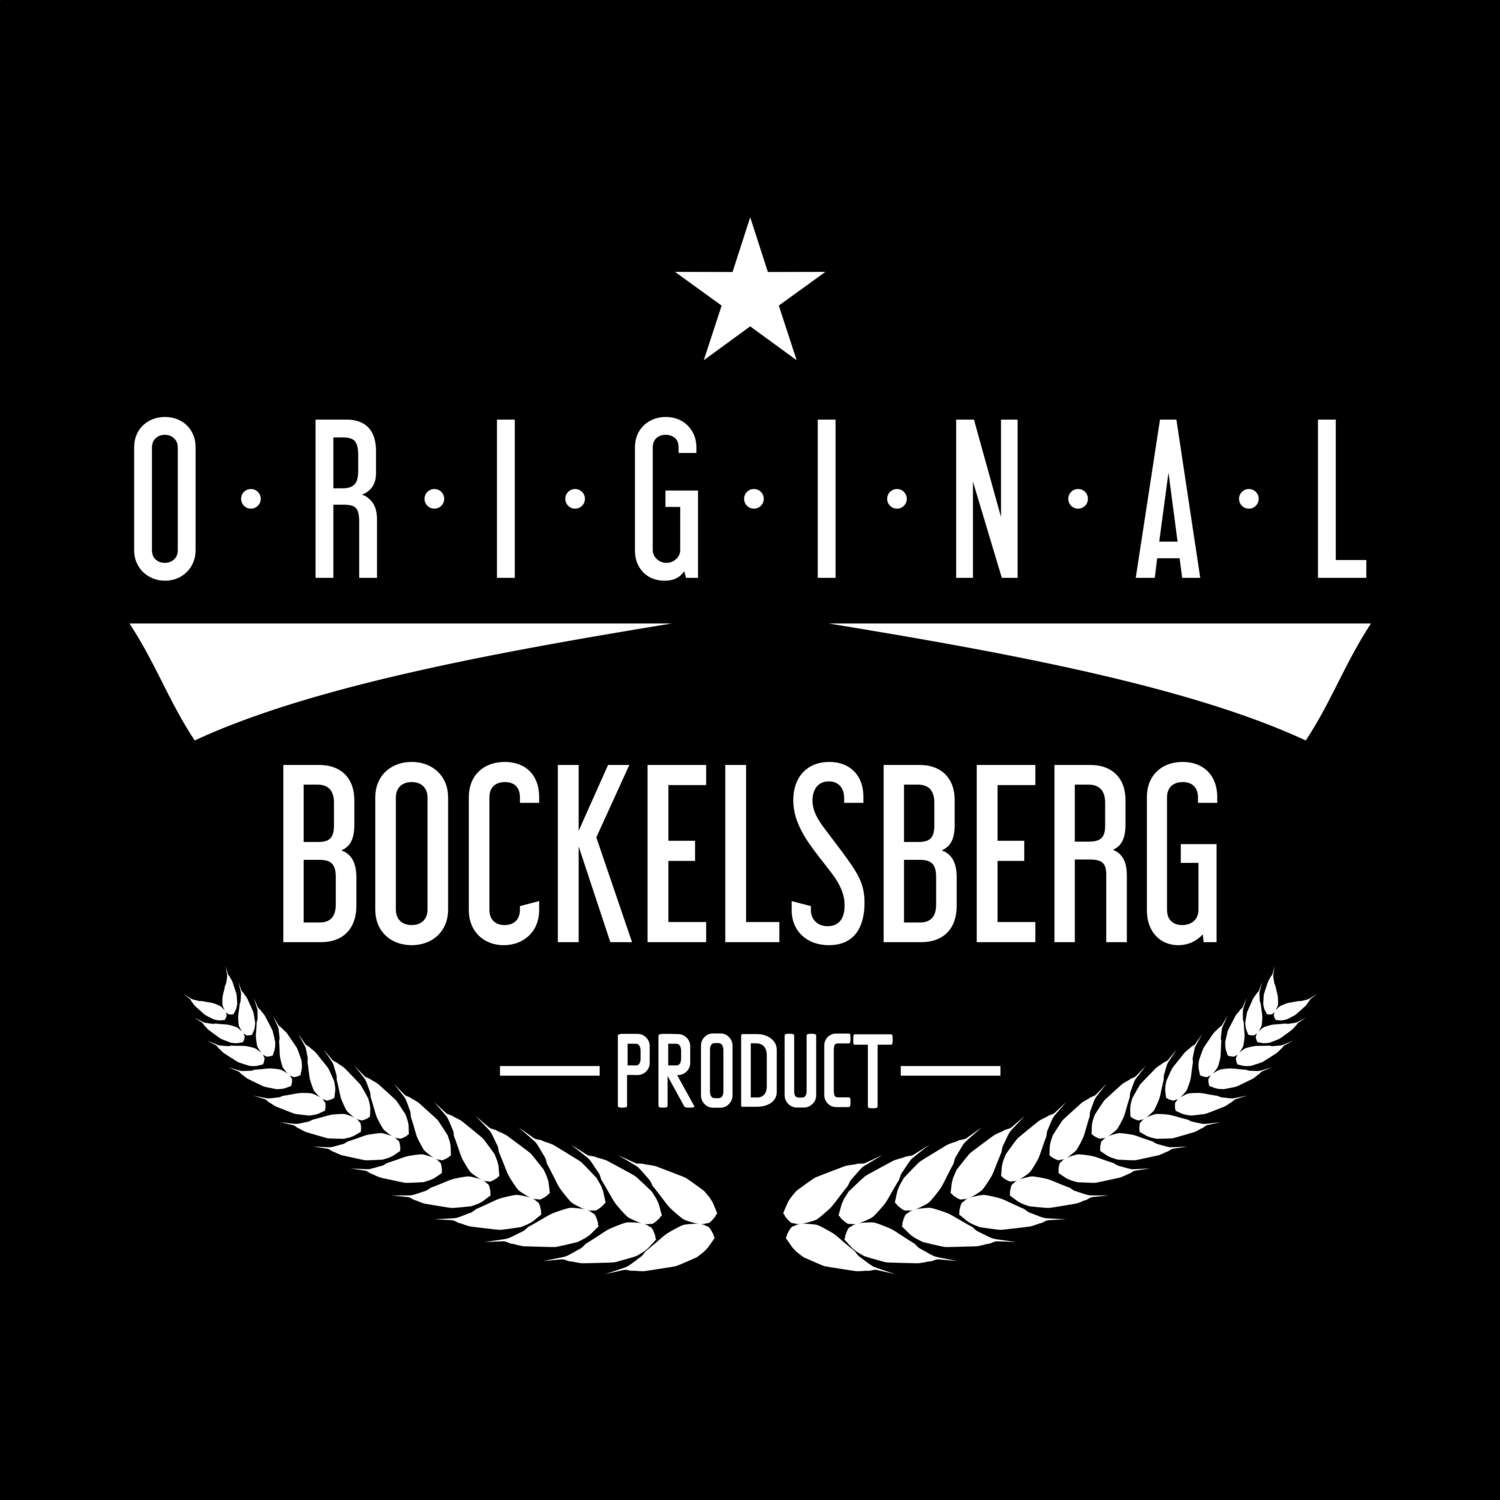 Bockelsberg T-Shirt »Original Product«